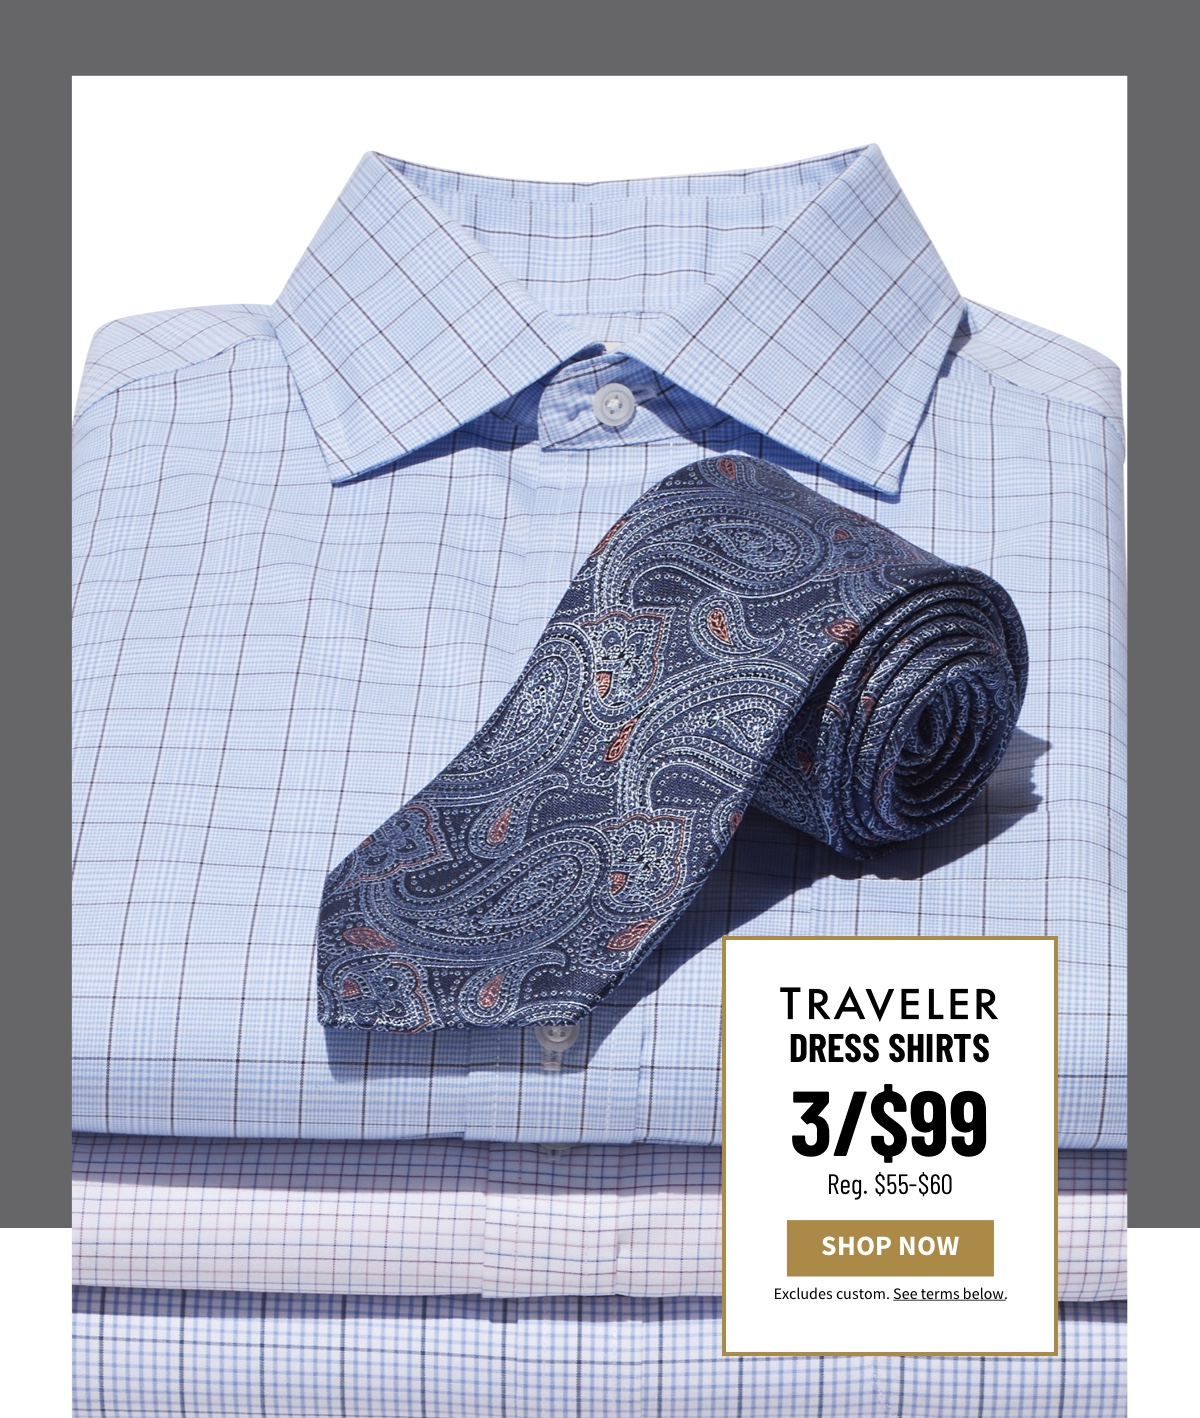 Traveler Dress Shirts 3/$99 Reg. $55-$60 Shop Now Excludes custom. See terms below.